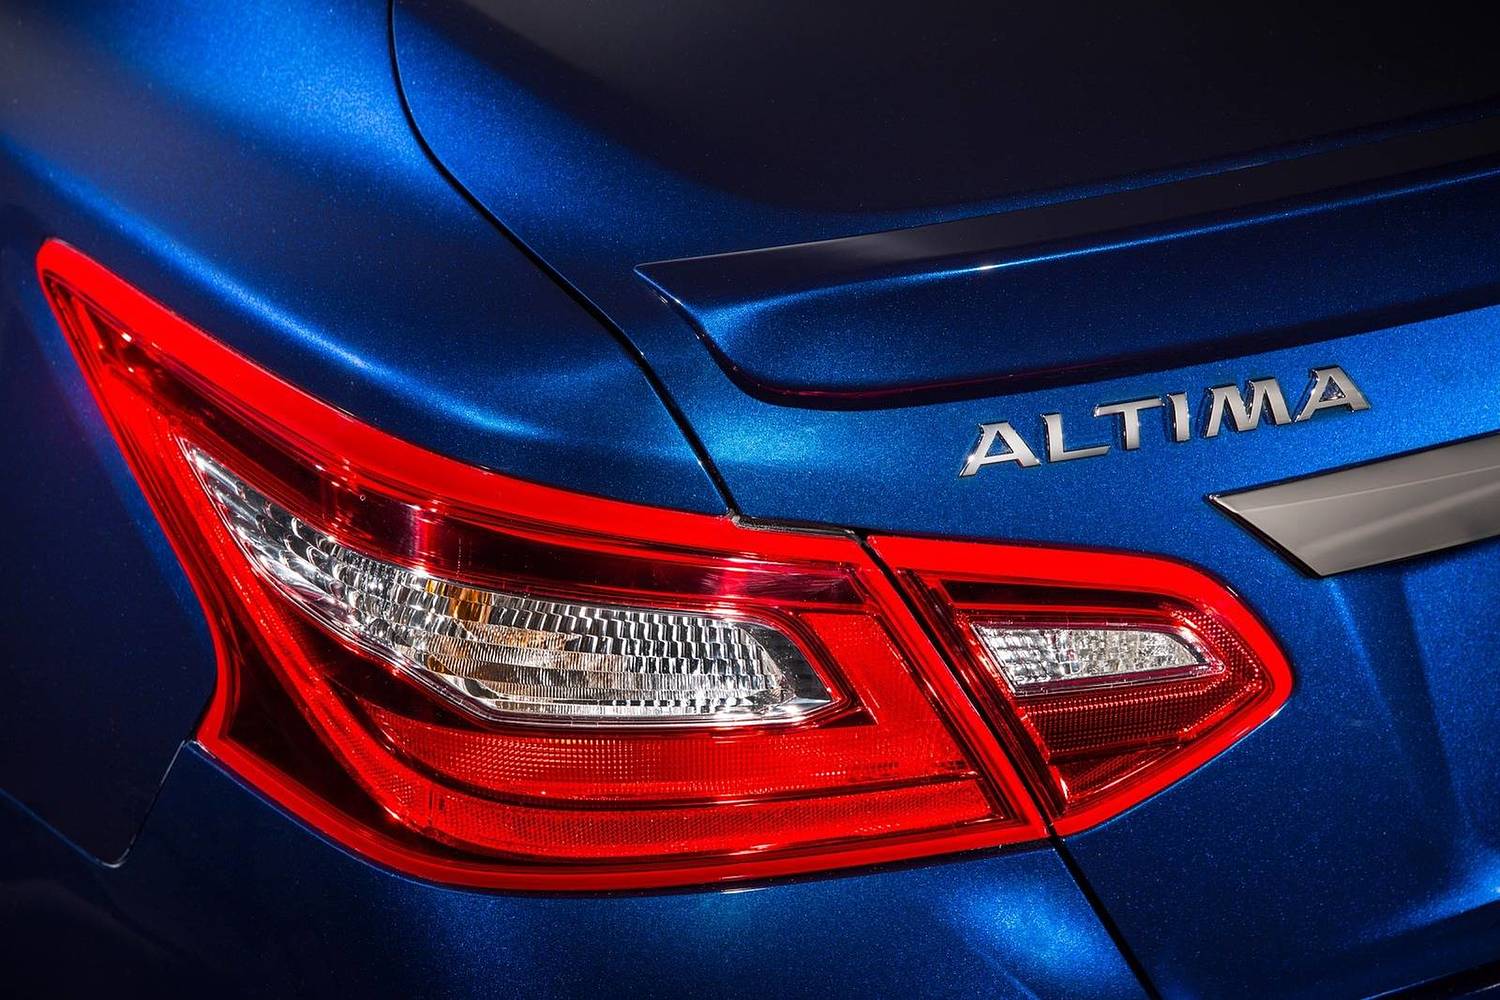 Nissan Altima 2.5 SR Sedan Rear Badge (2017 model year shown)